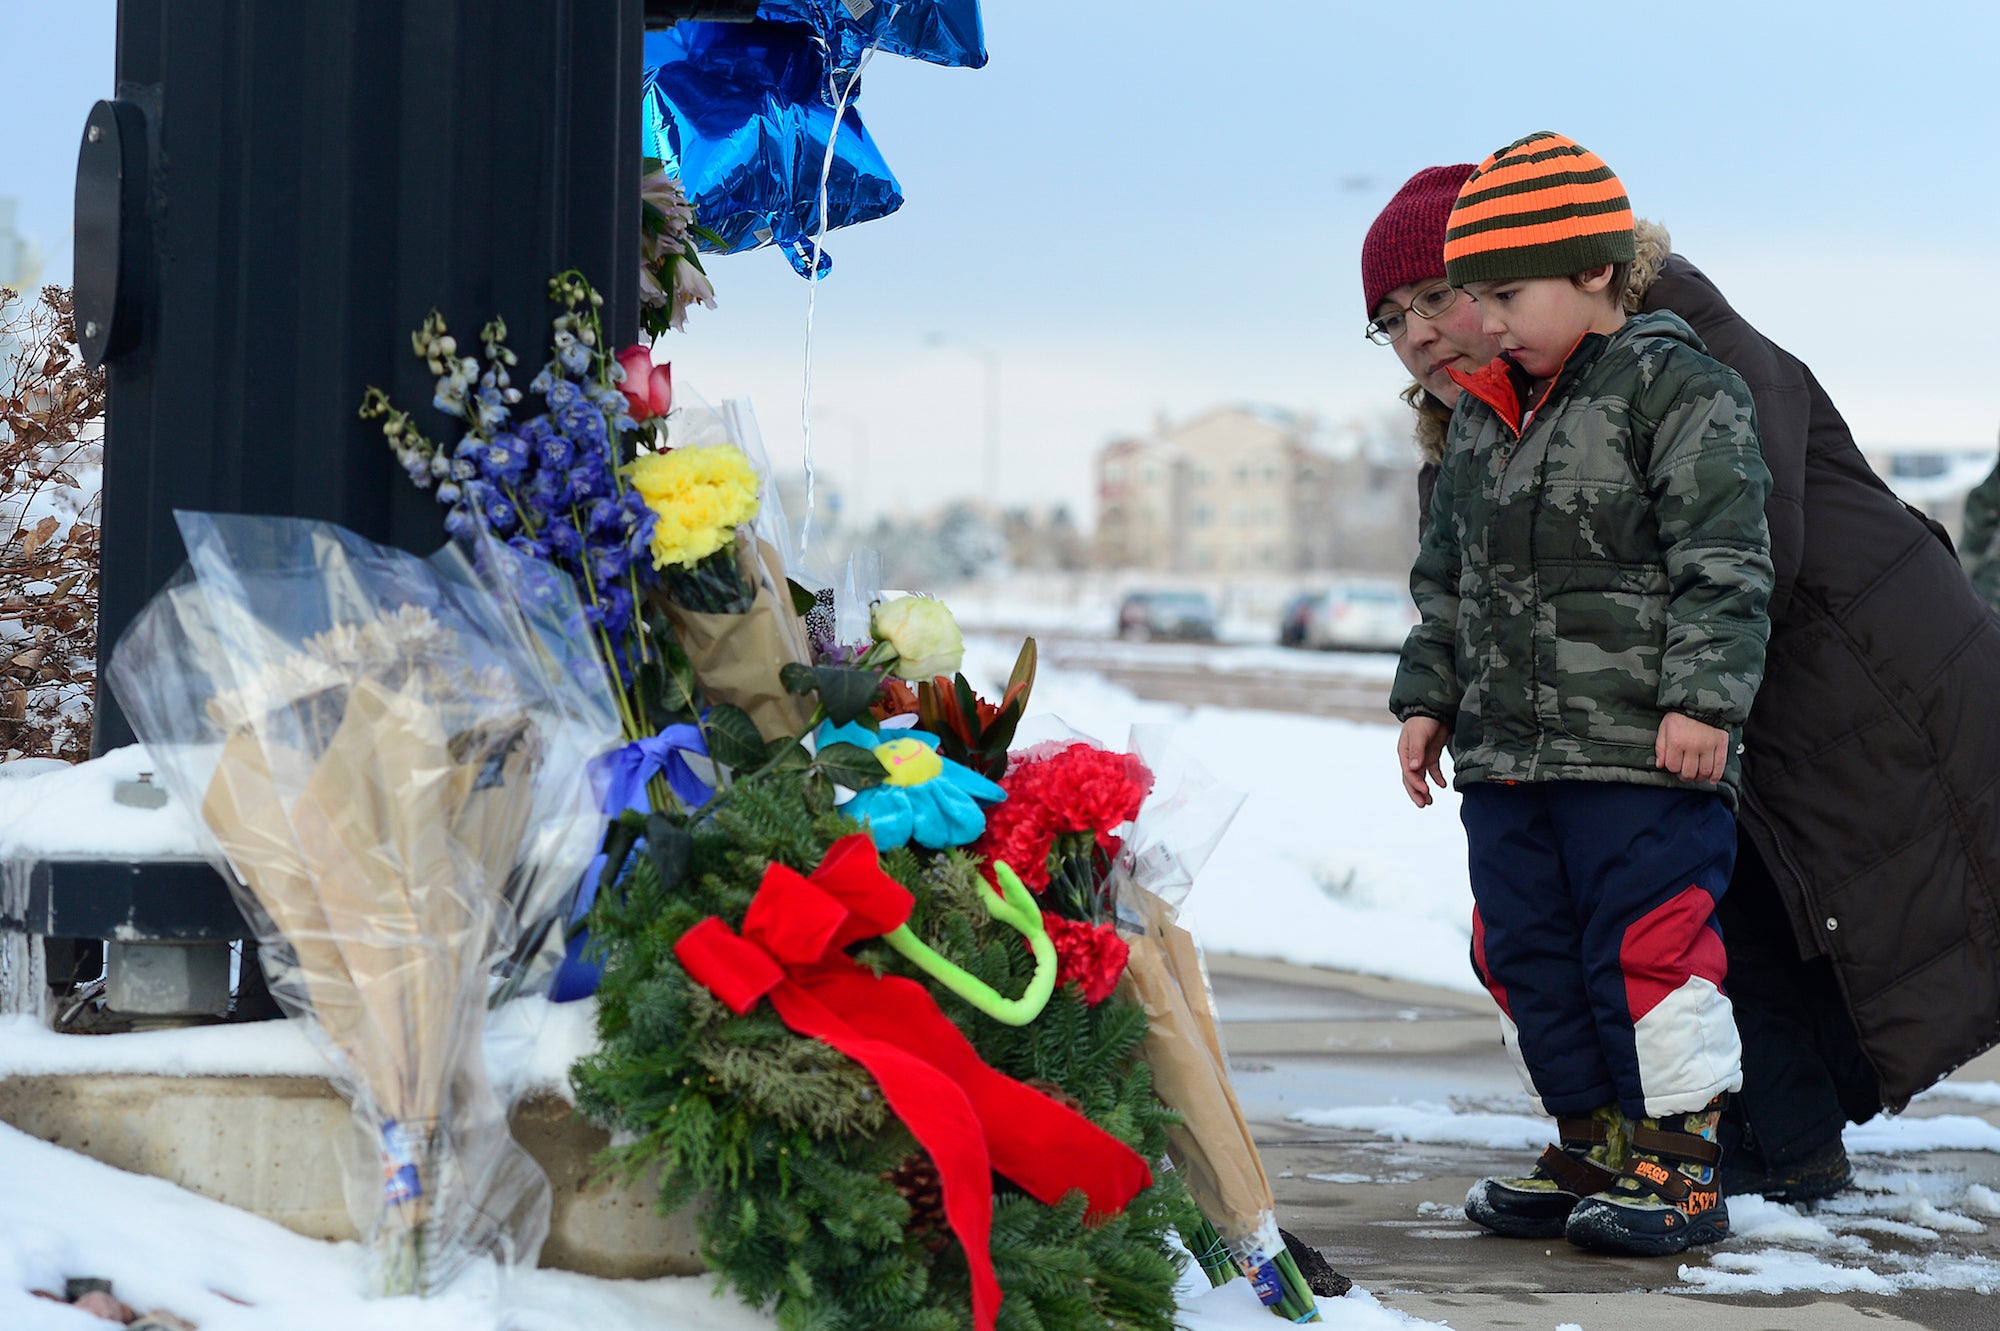 A man and his son visit a memorial for the shooting victims in Colorado Springs, Colorado.